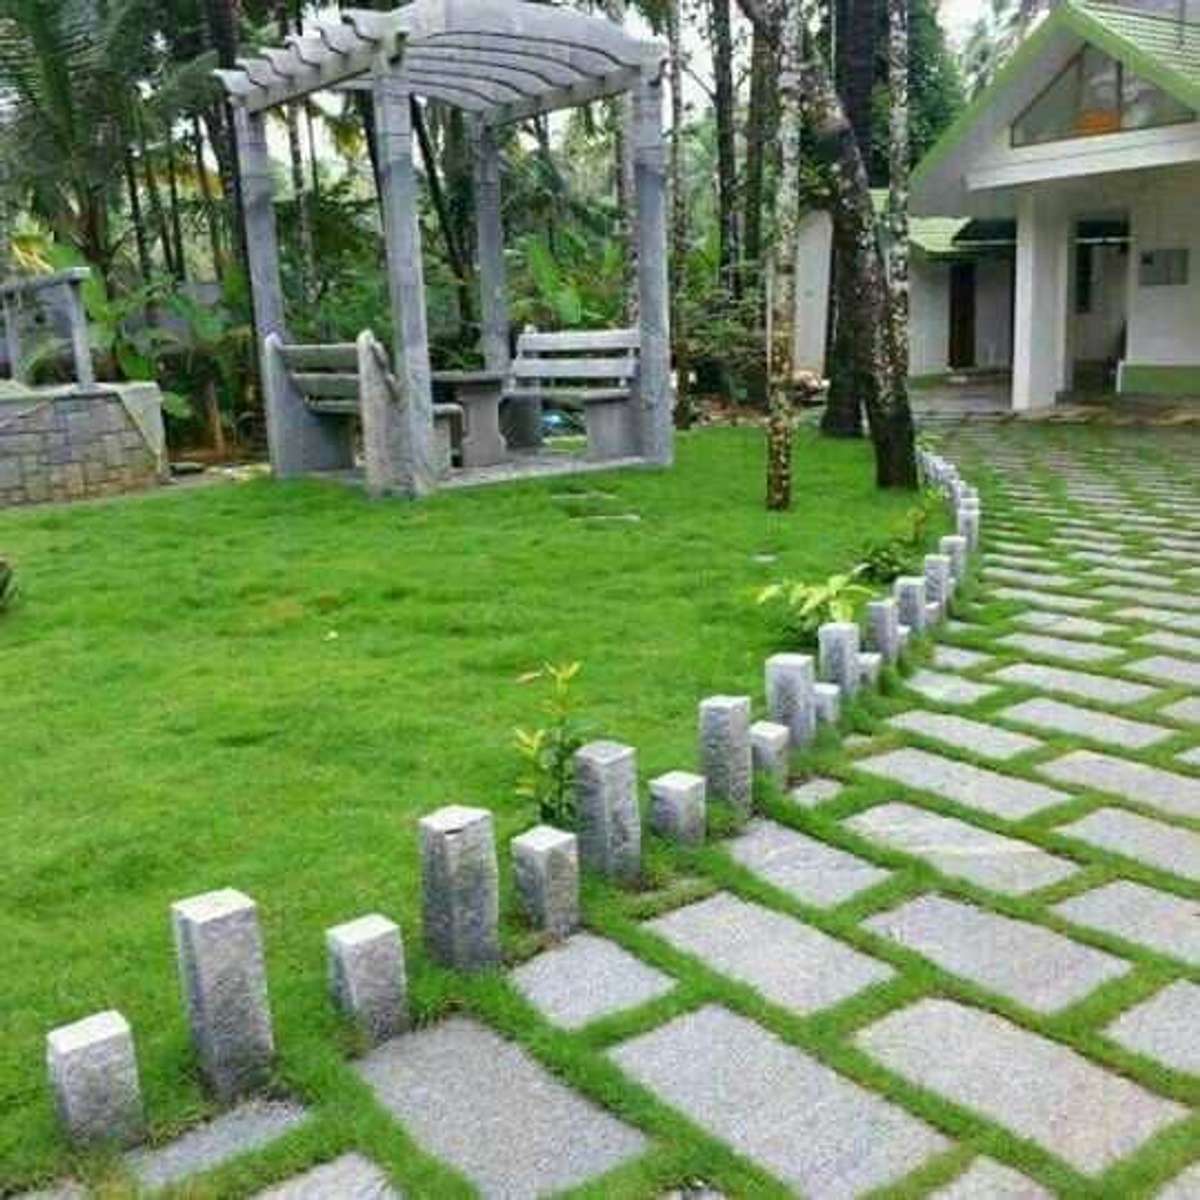 
landscape #paving stones #Thrissur#malapuram#9895873137

